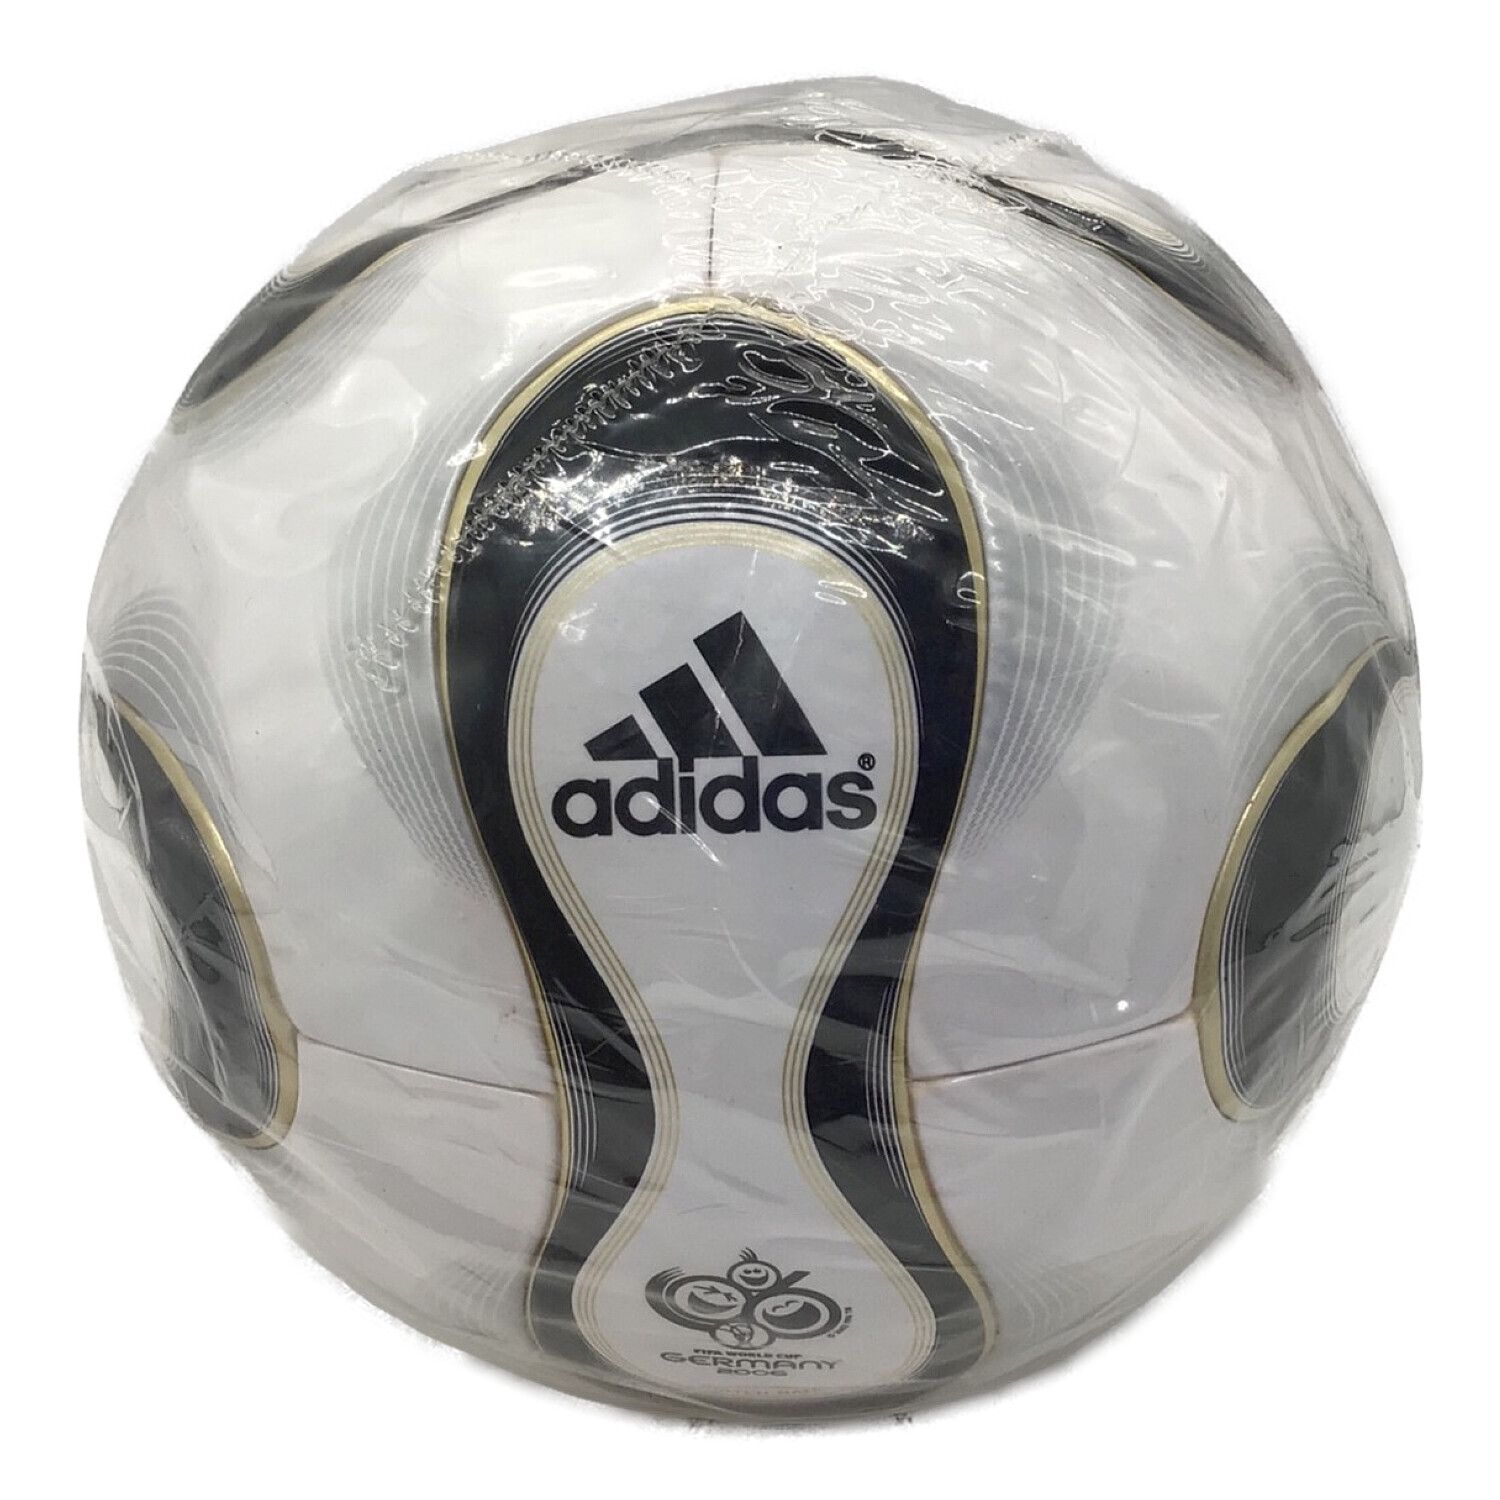 adidas (アディダス) 2006年ドイツワールドカップ公認球 チーム